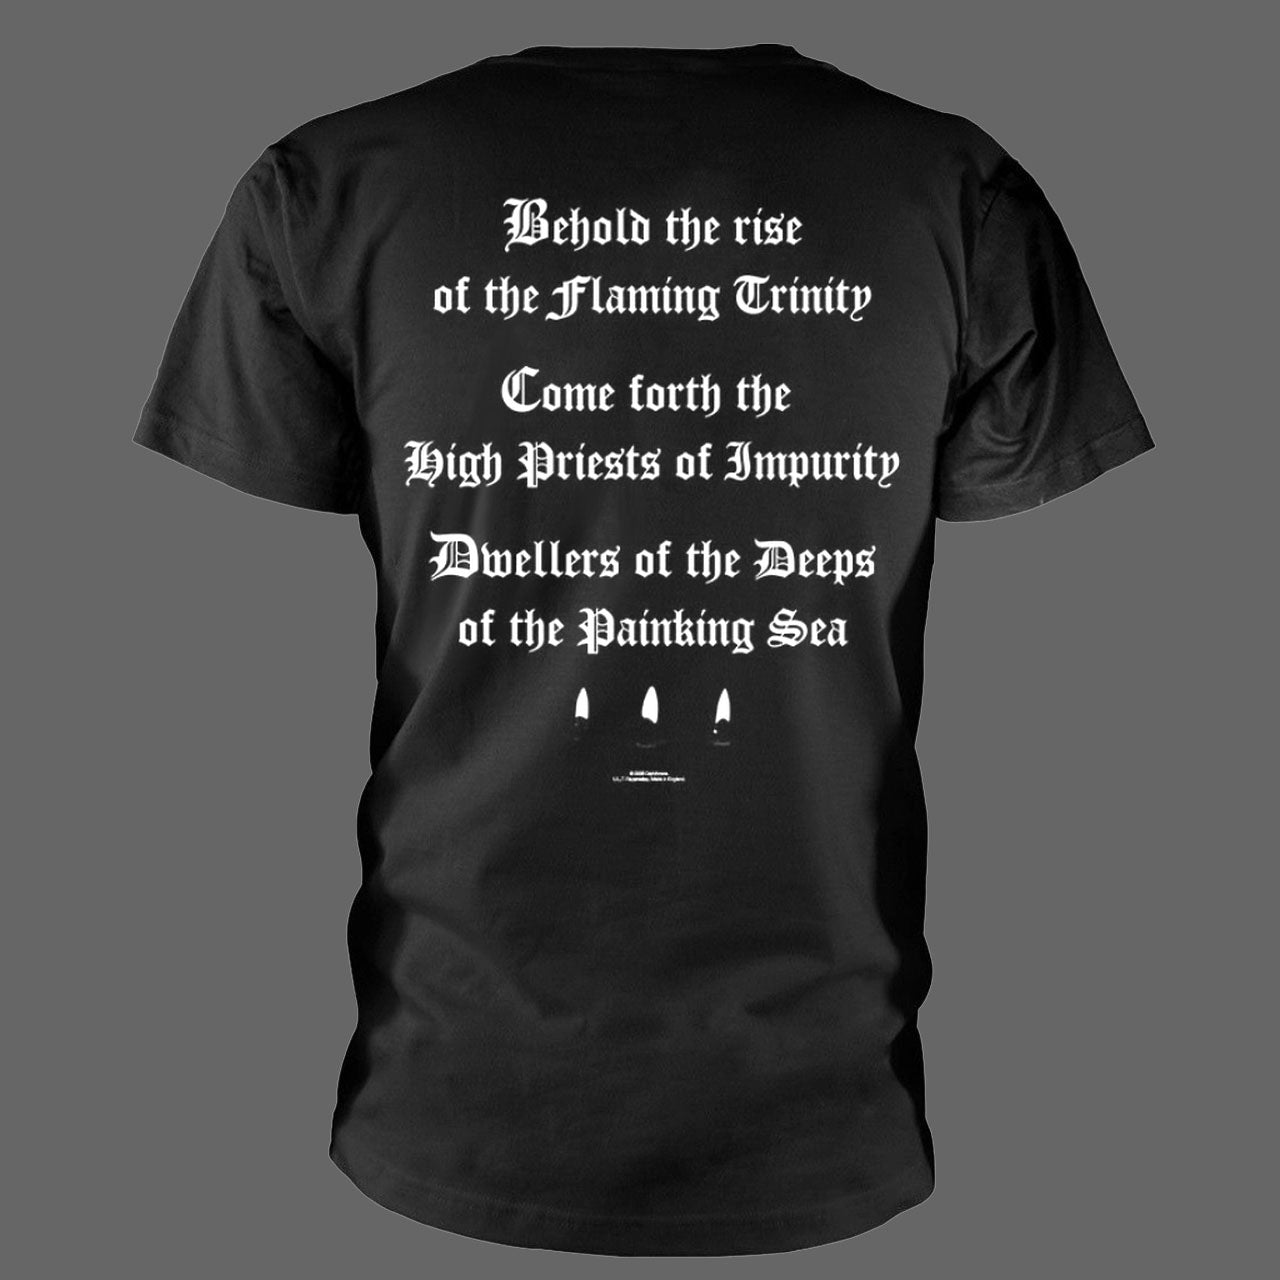 Darkthrone - Panzerfaust (T-Shirt)